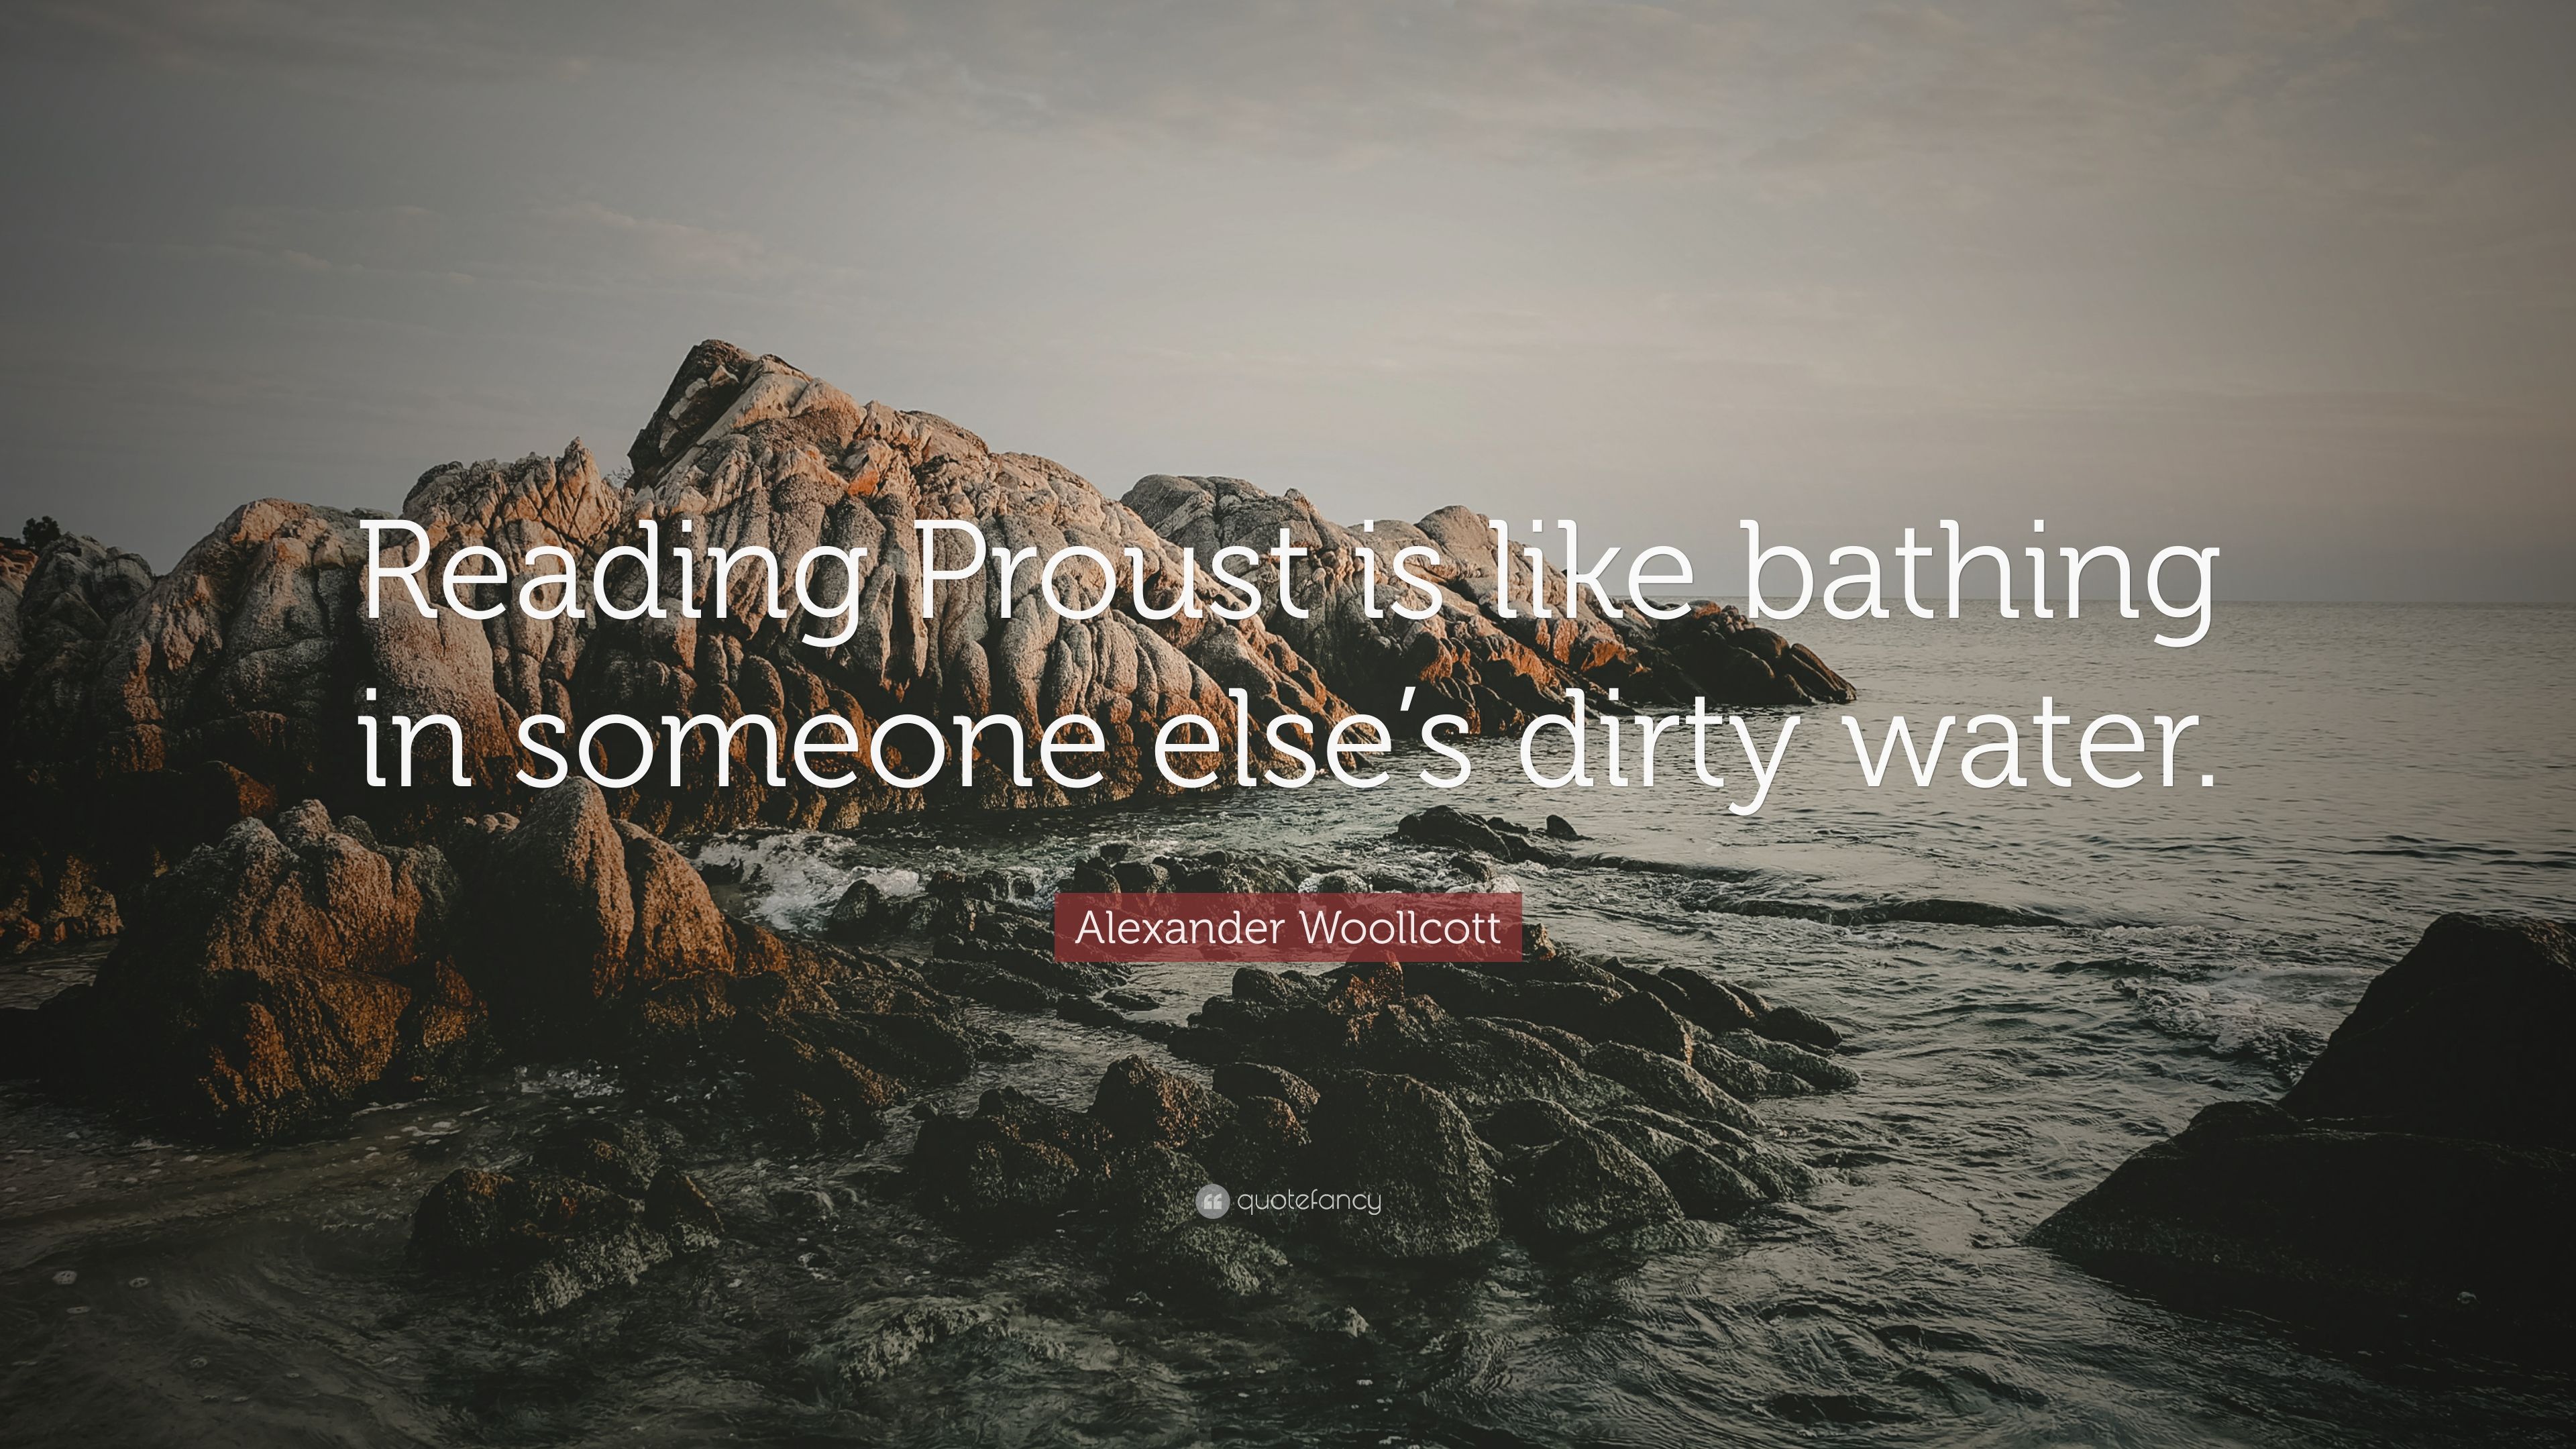 Alexander Woollcott Quote: “Reading Proust is like bathing